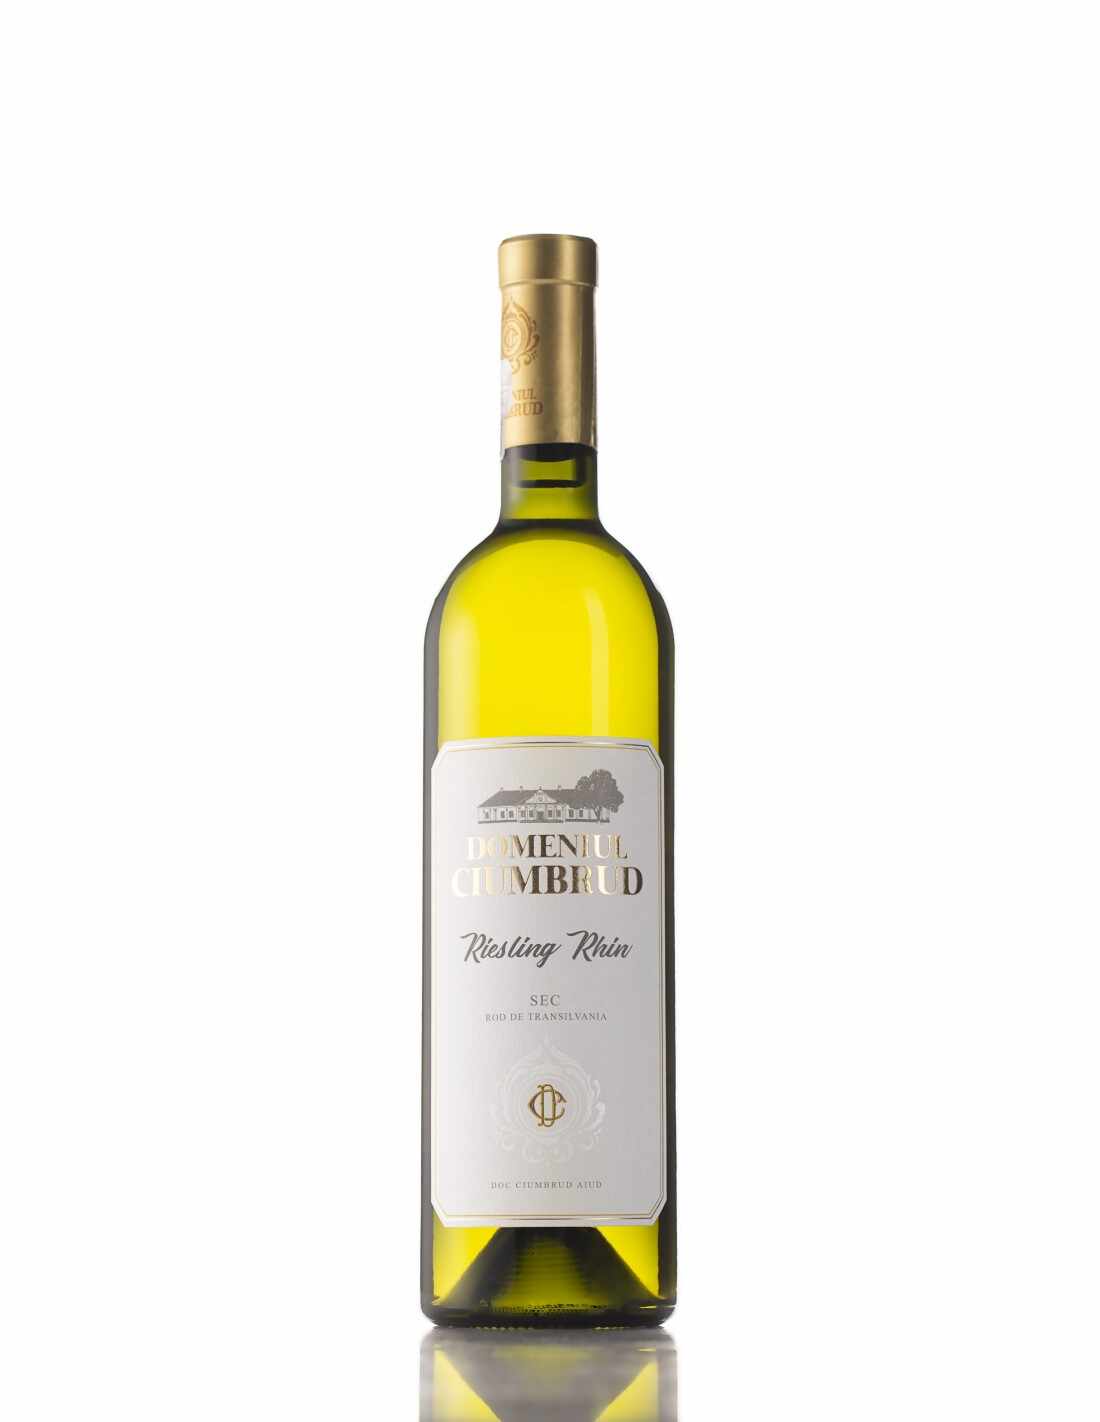 Vin alb sec, Riesling Rhein, Domeniul Ciumbrud, 0.75L, 12.2% alc., Romania